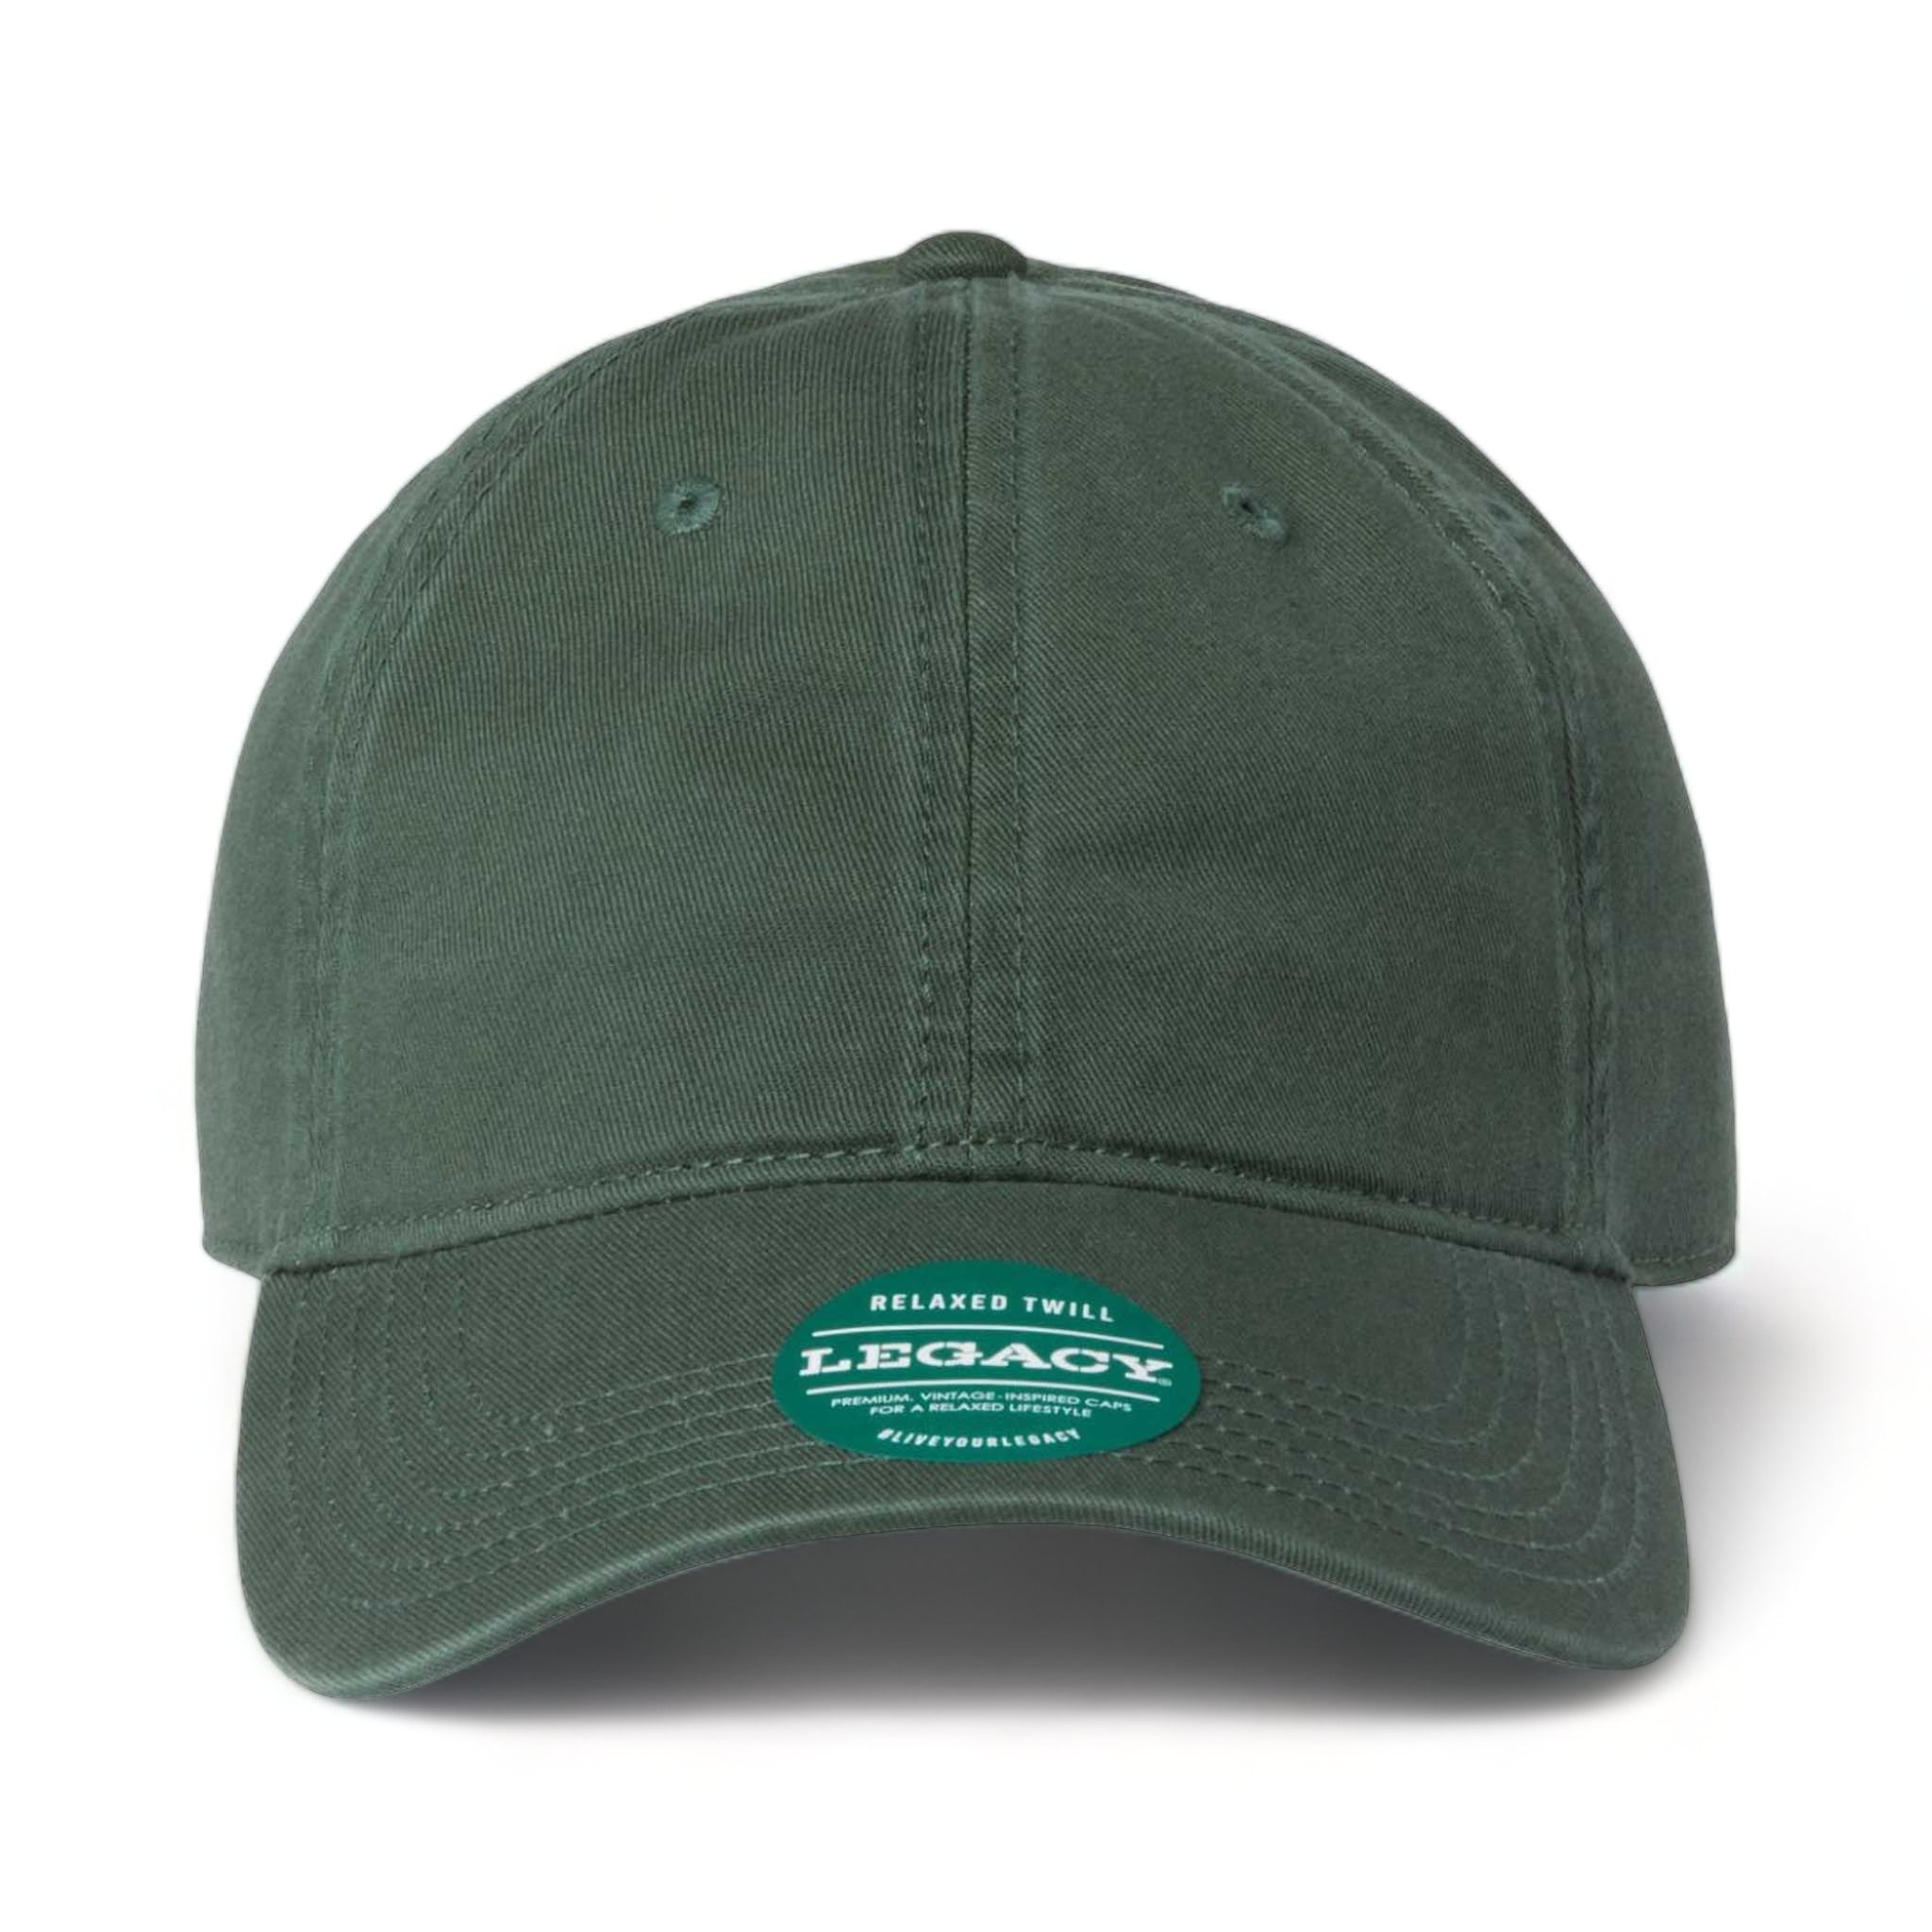 Front view of LEGACY EZA custom hat in dark green